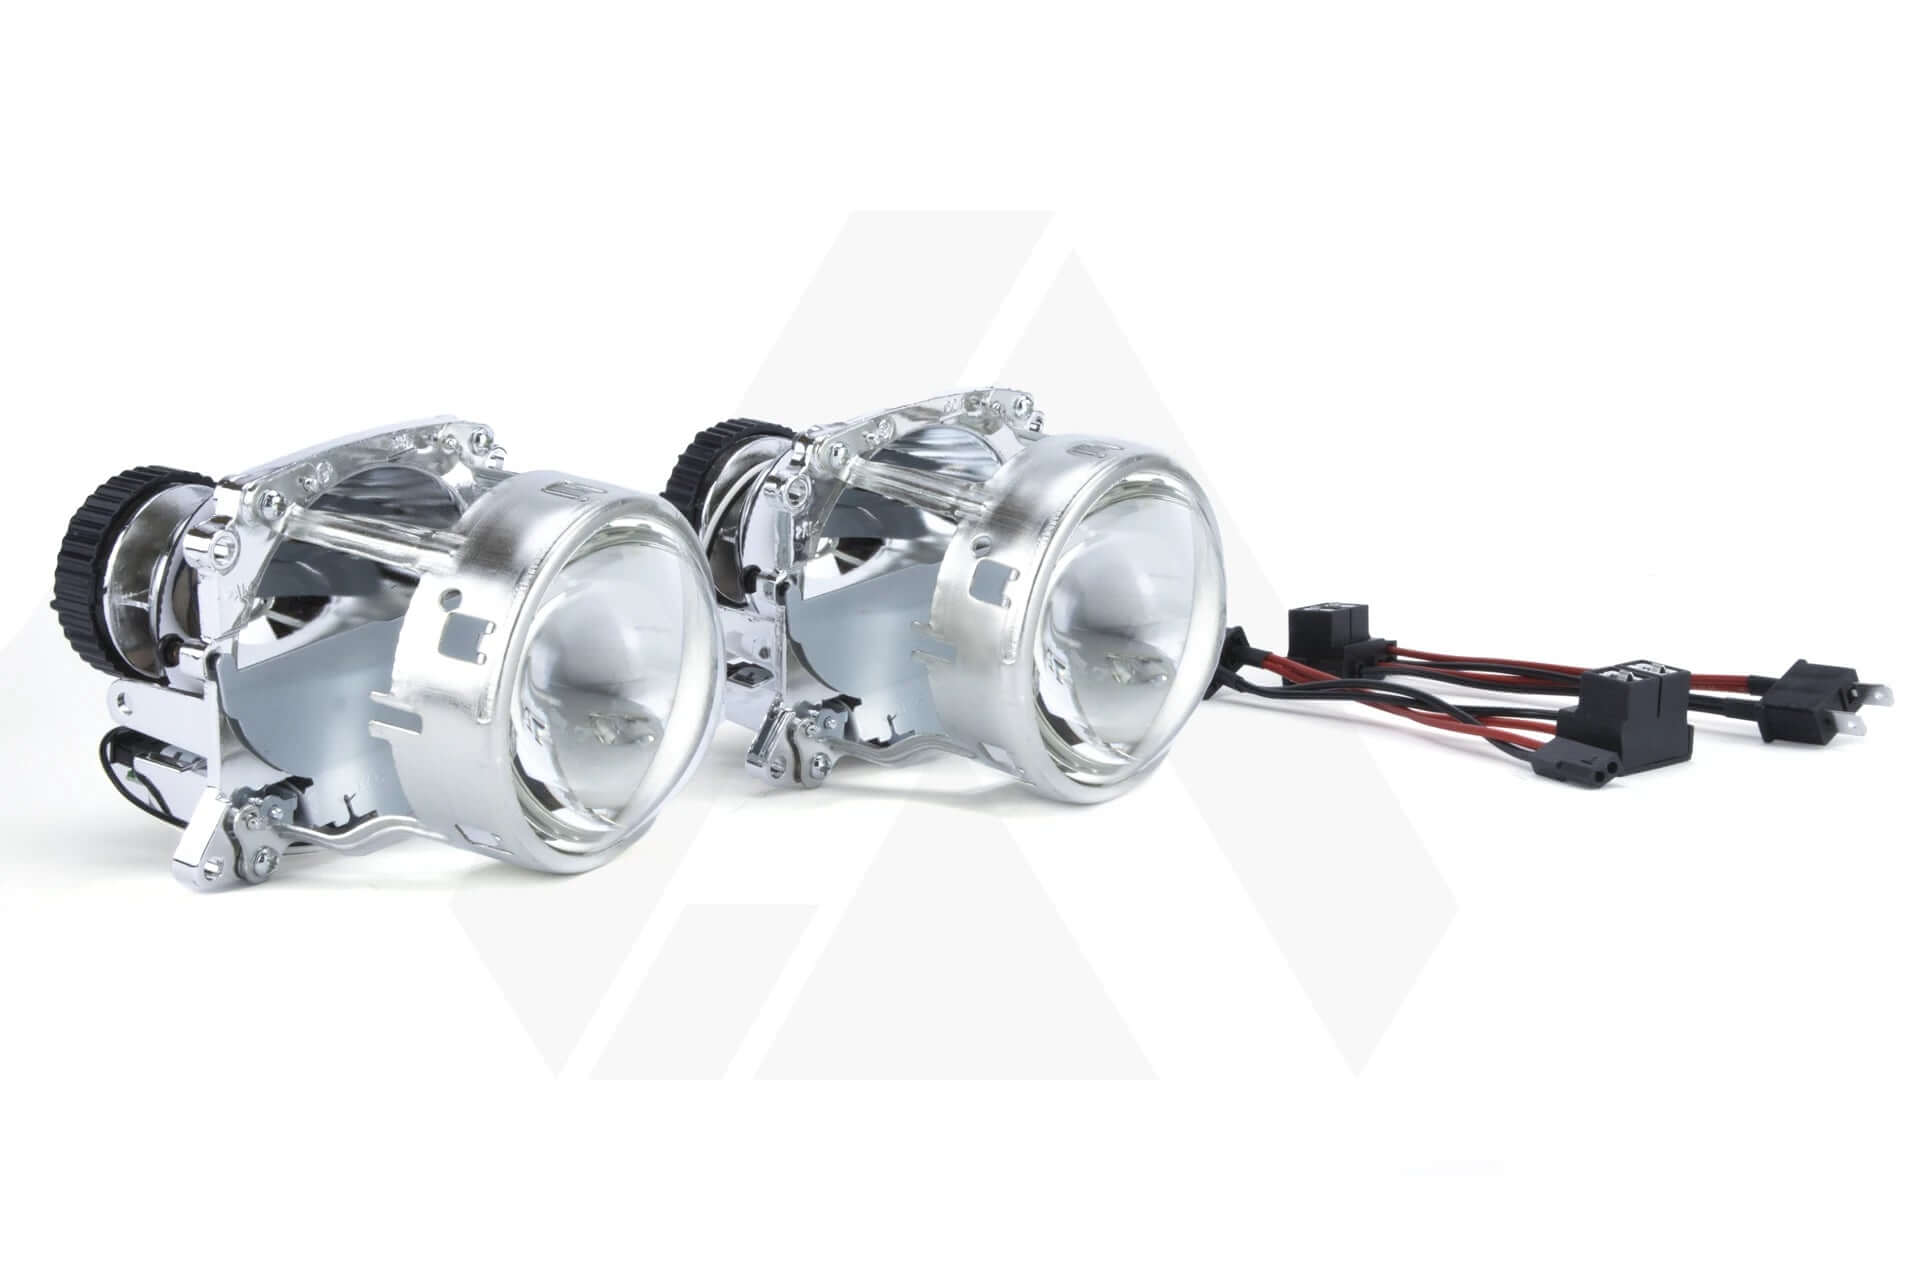 Mini Cooper R56 06-13 bi-xenon headlight repair & upgrade kit for Xenon HID headlights